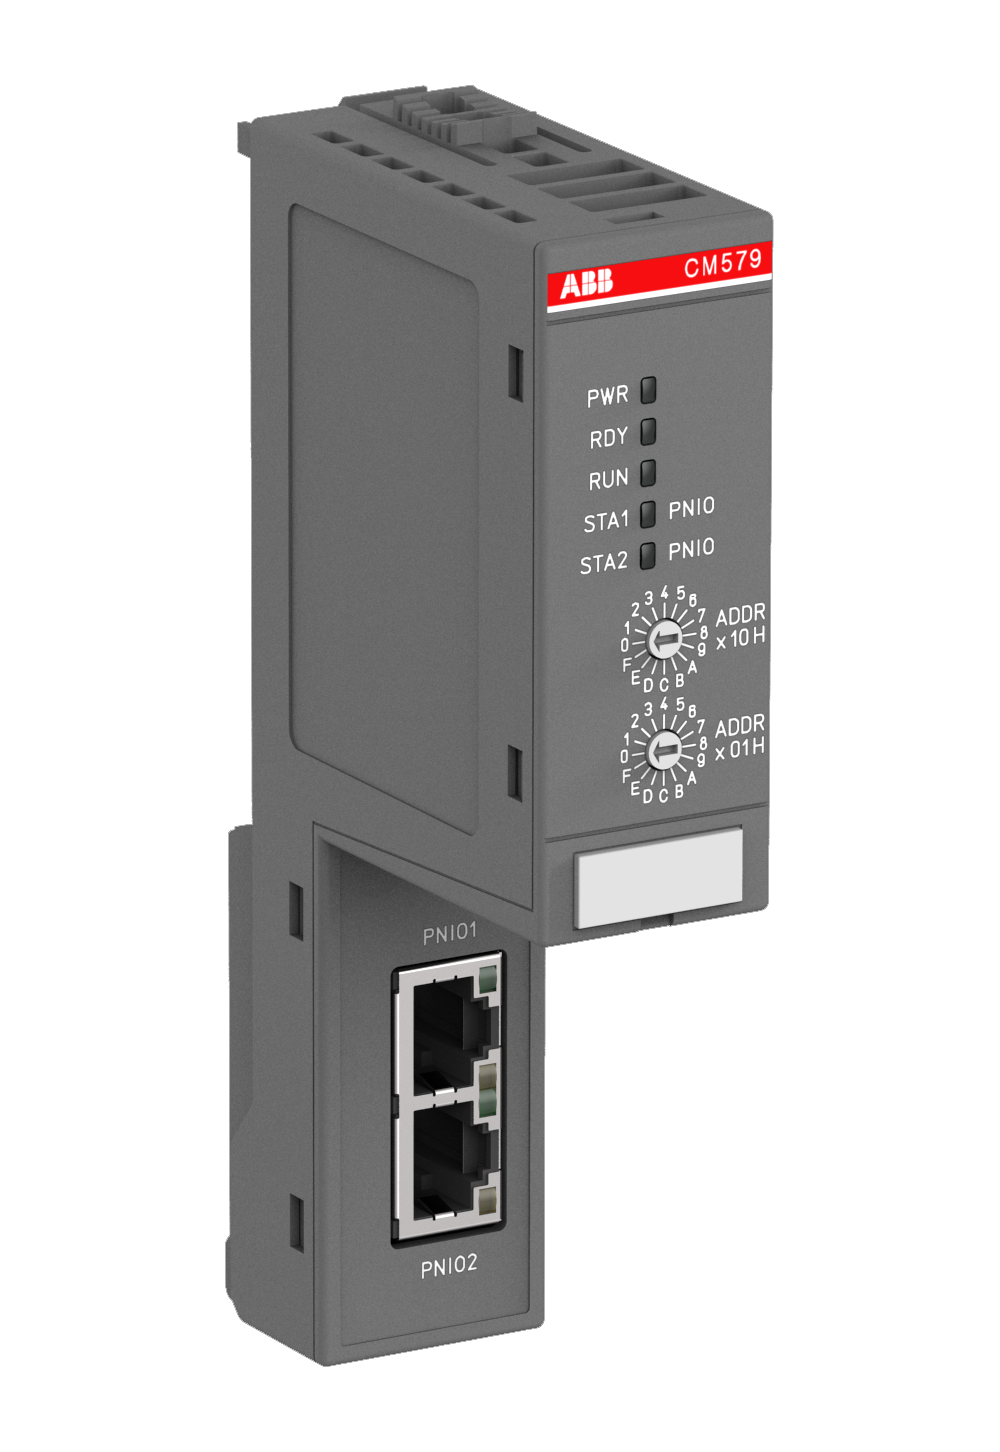 ABB CM579-ETHCAT: AC500 Communication module. EtherCAT master.